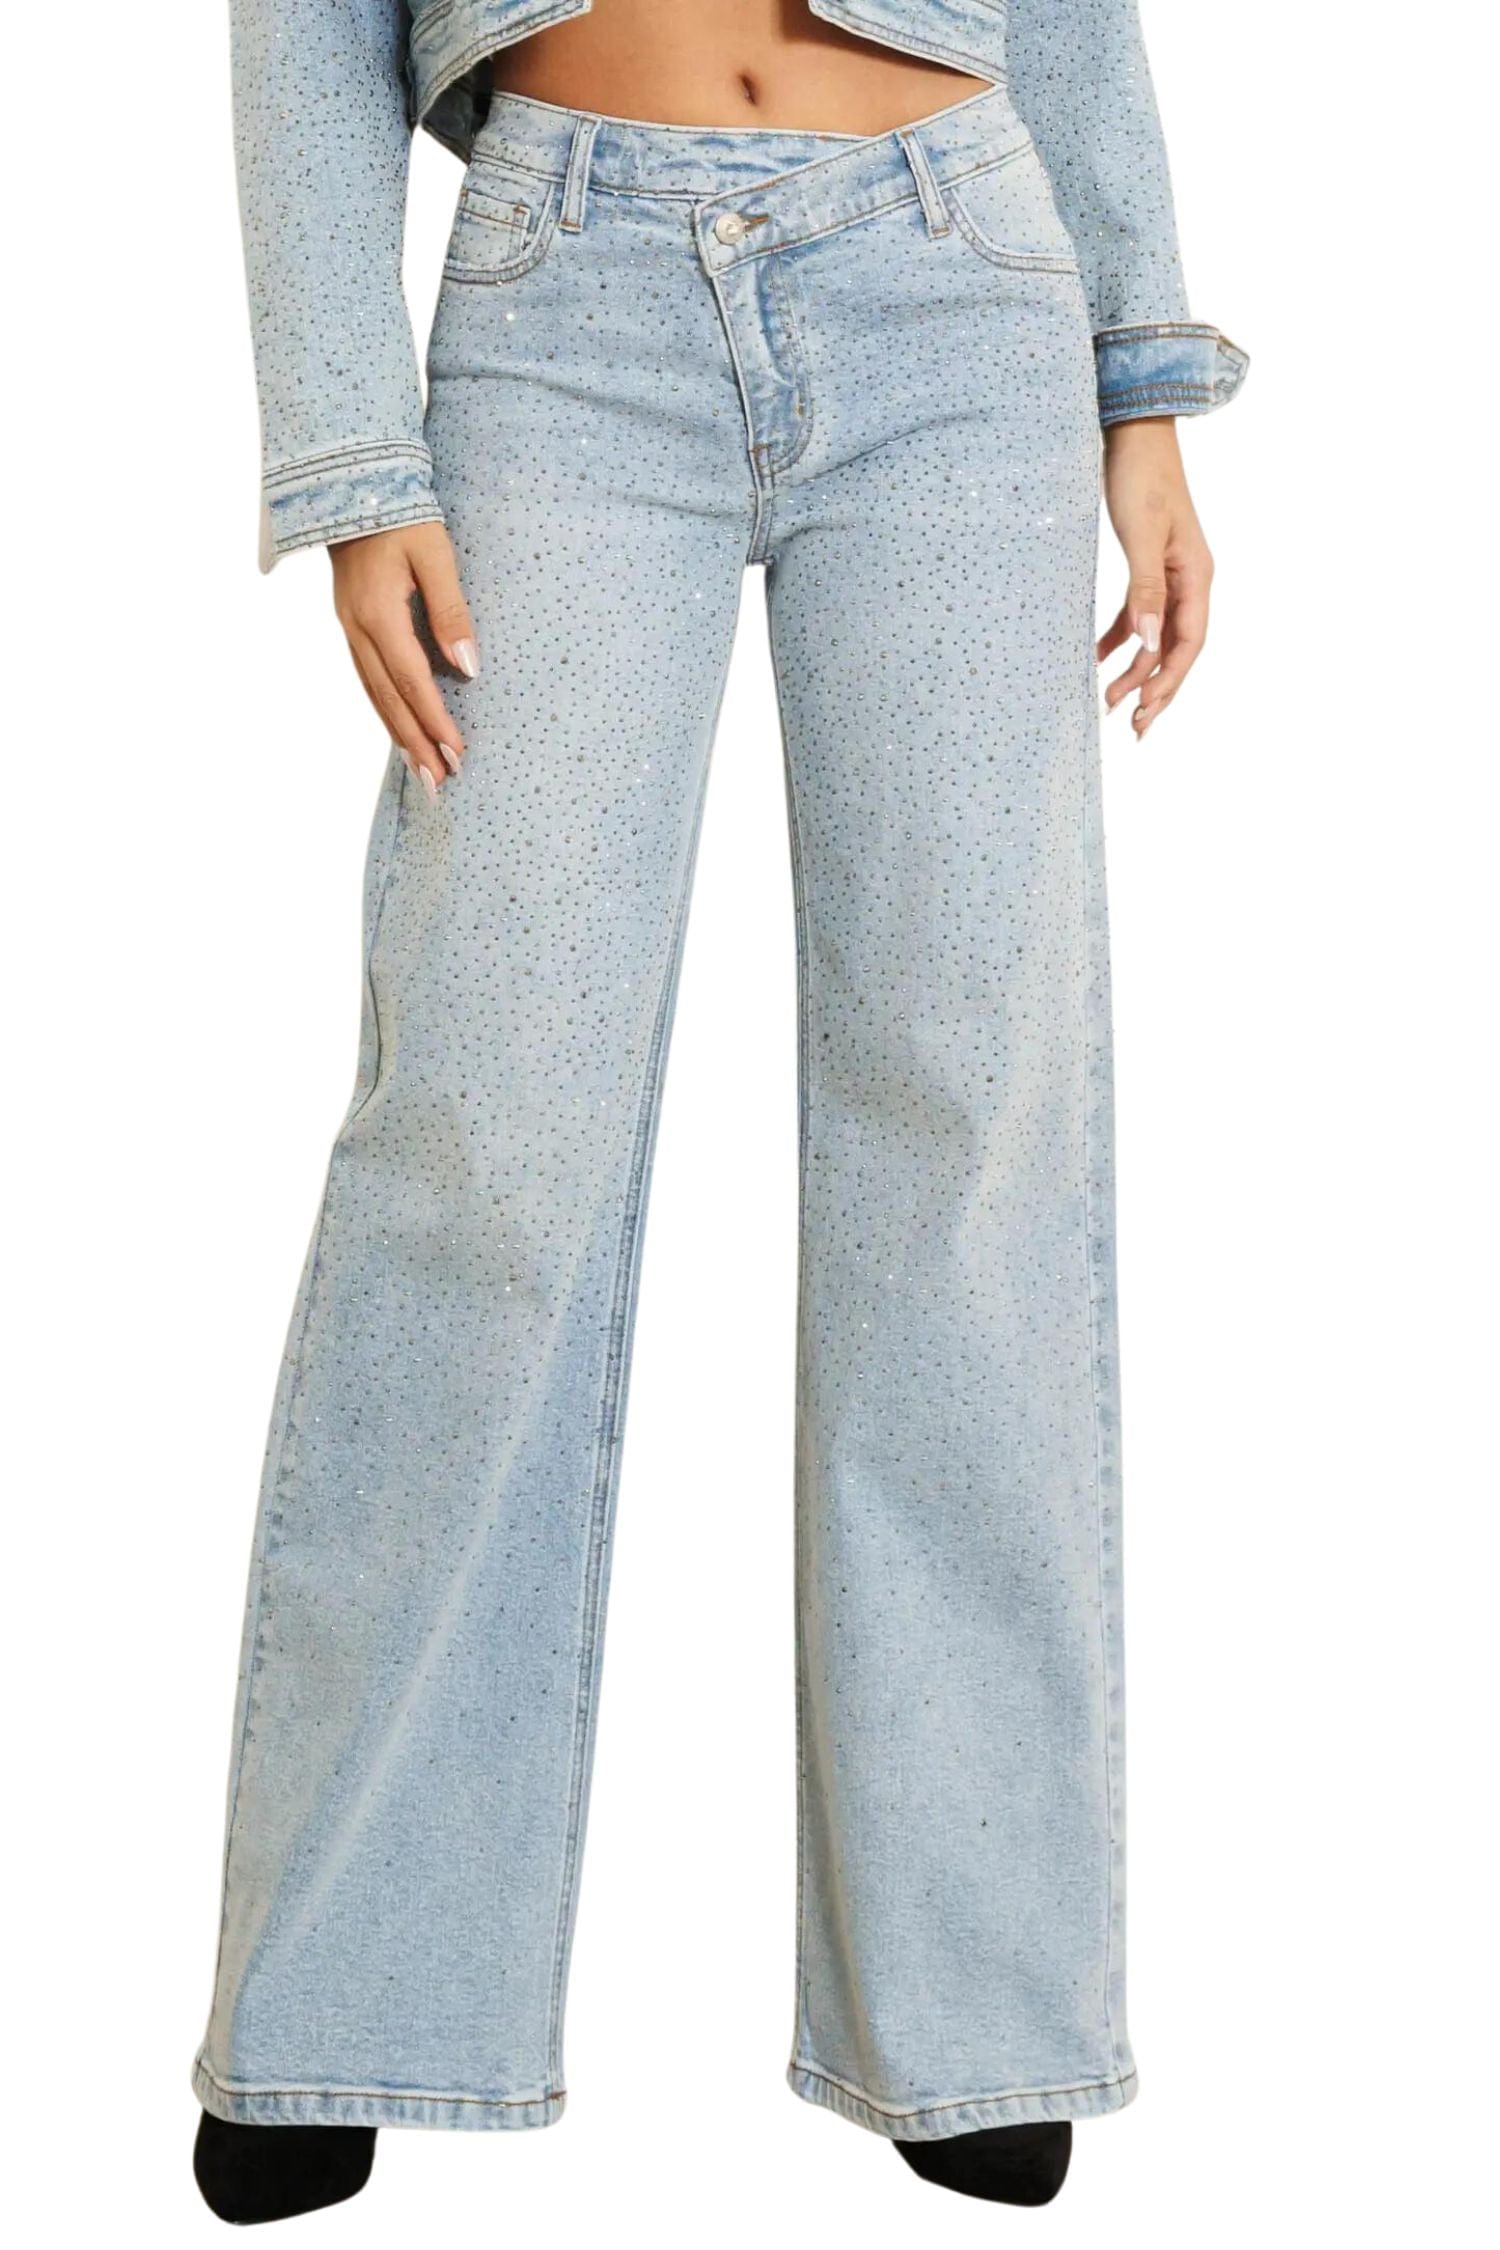 Rhinestone Jeans